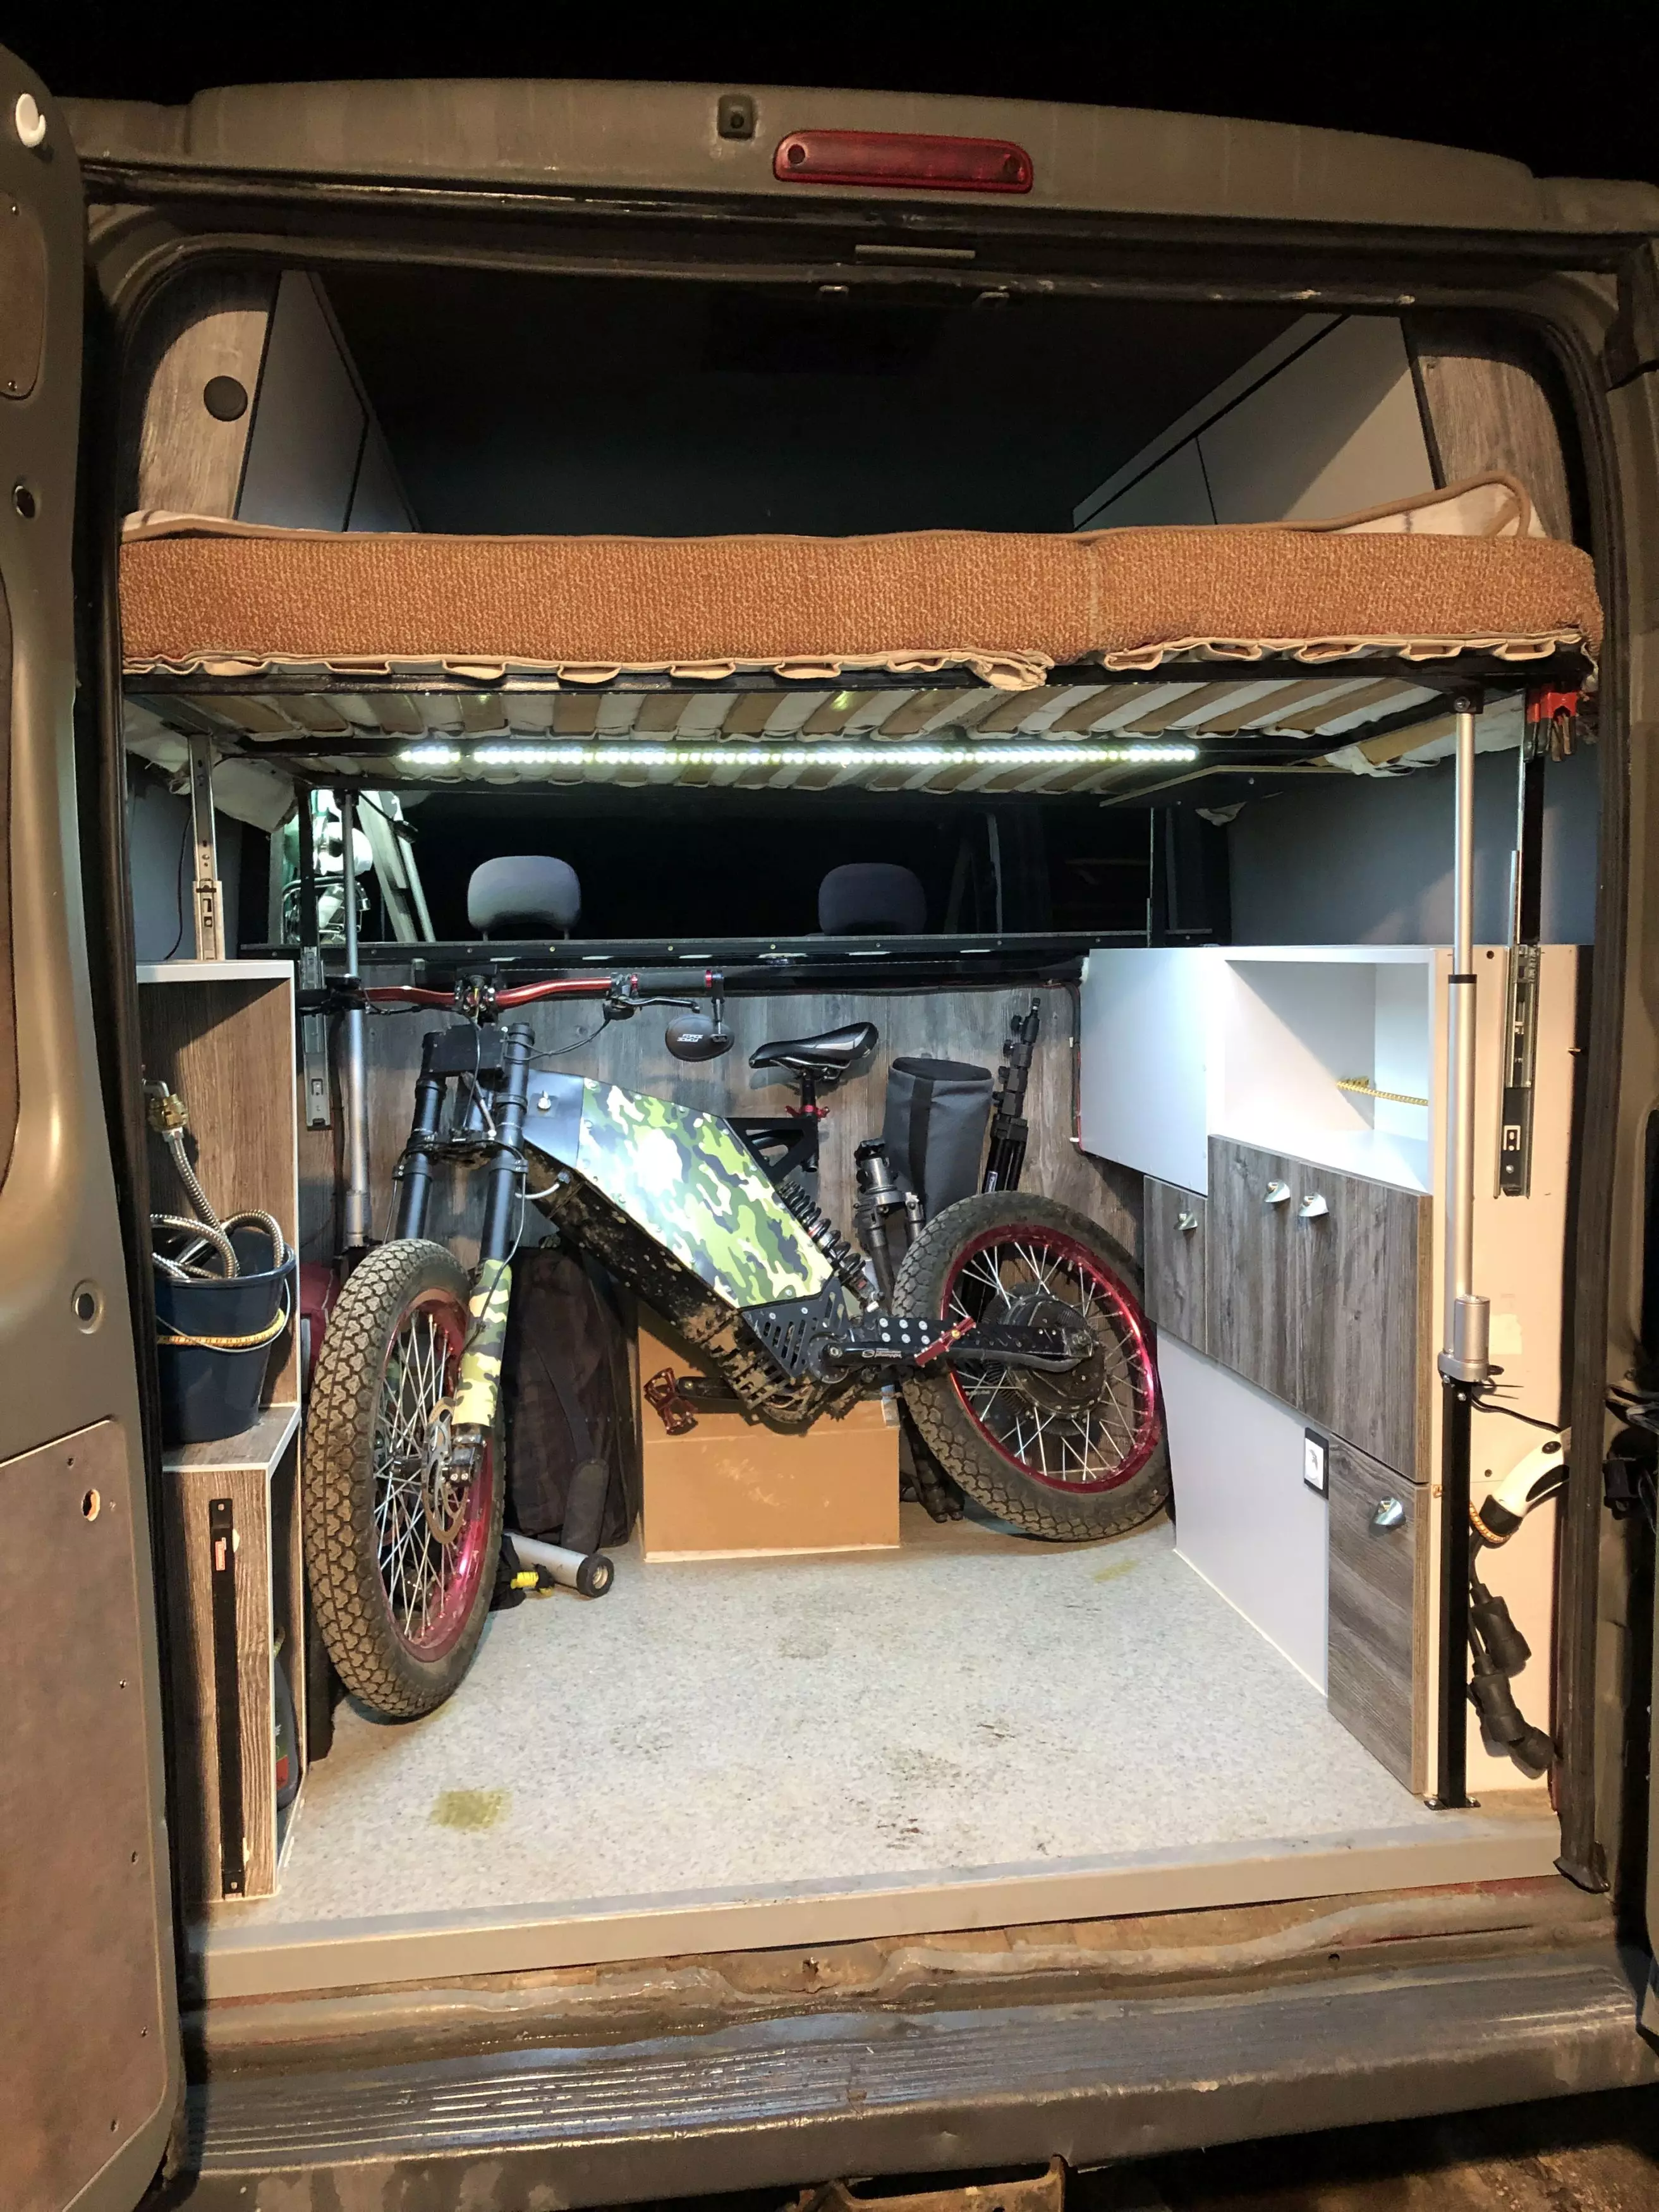 The van has a built in 'garage' to keep bikes.